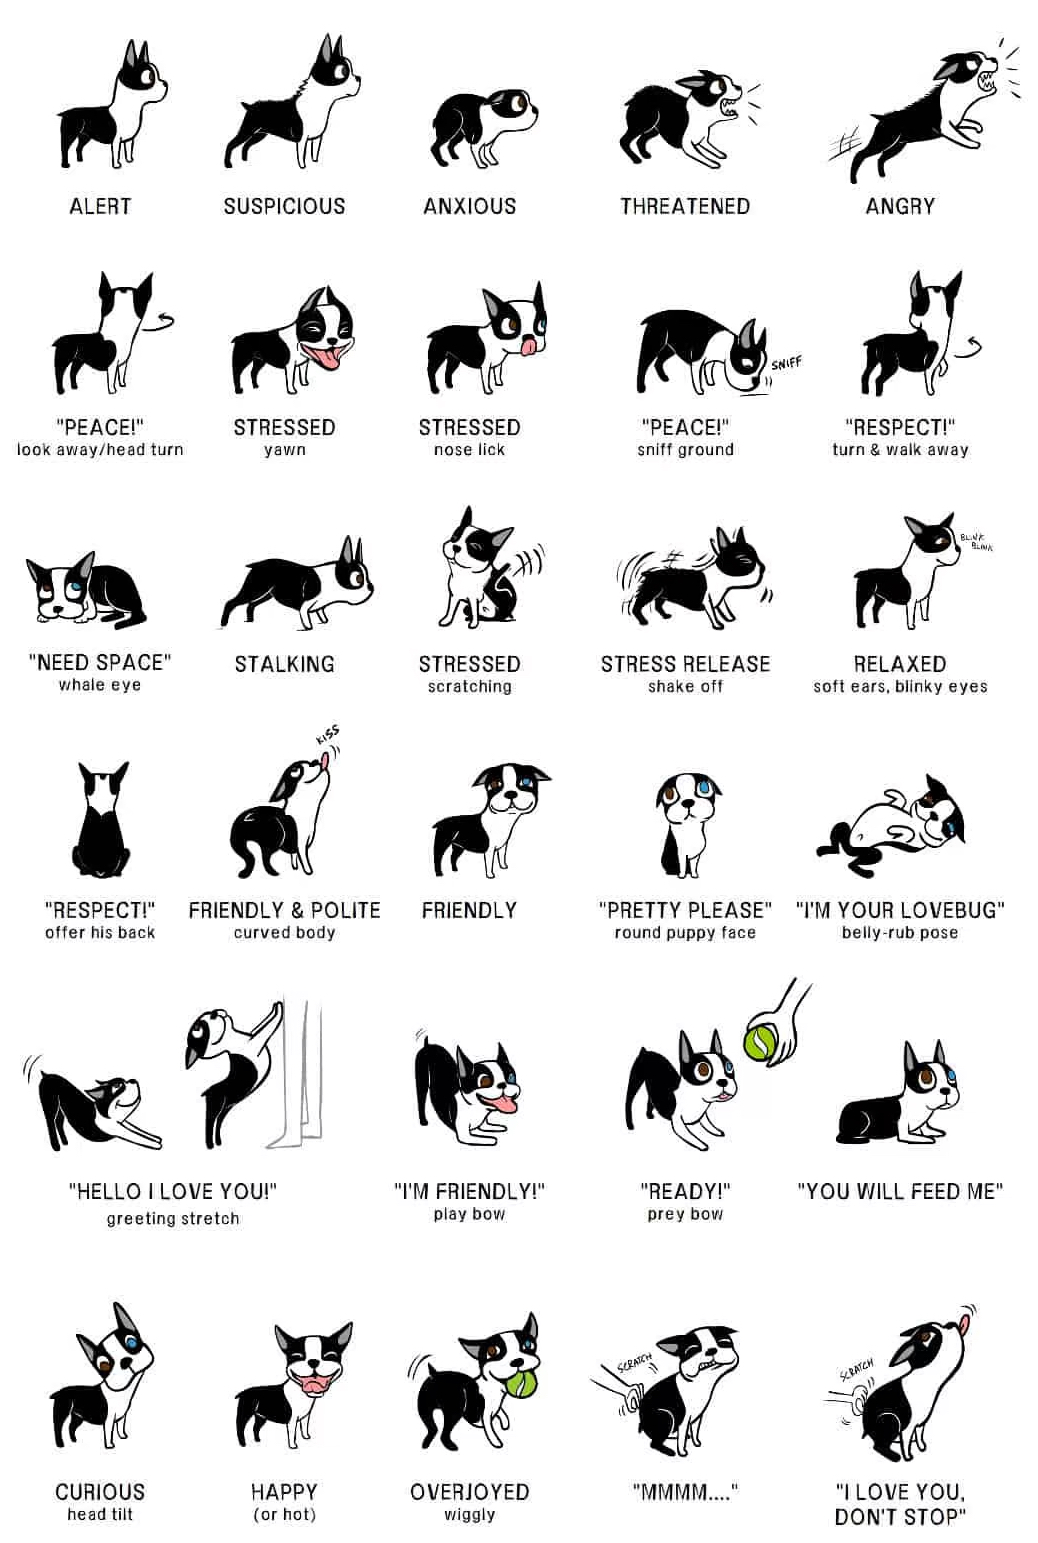 Dog Body Language Canine Communication: Understanding Your Dog's Body Language and Signals 1